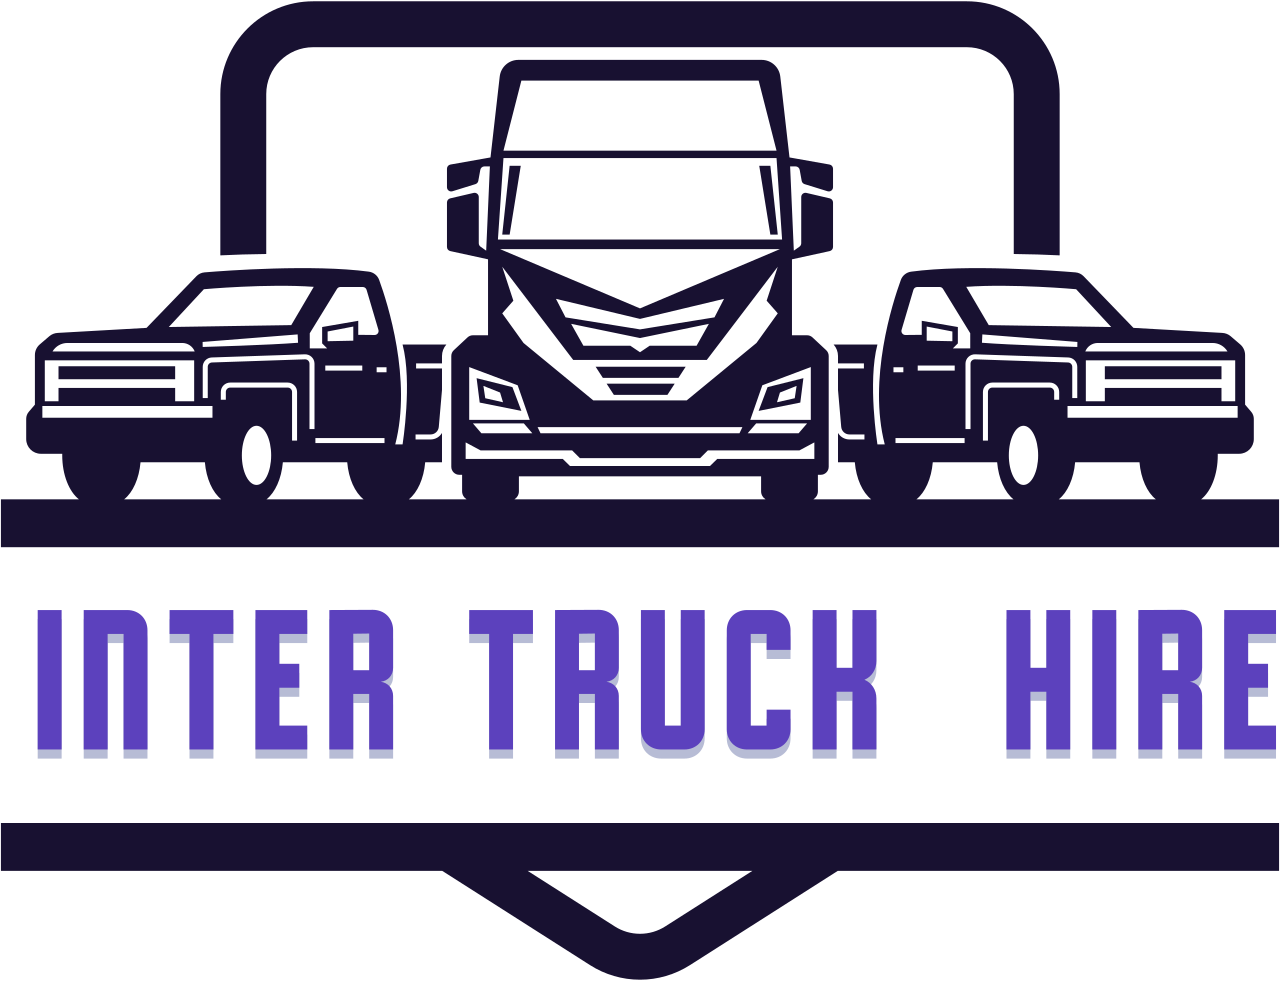 Inter Truck  hire's logo